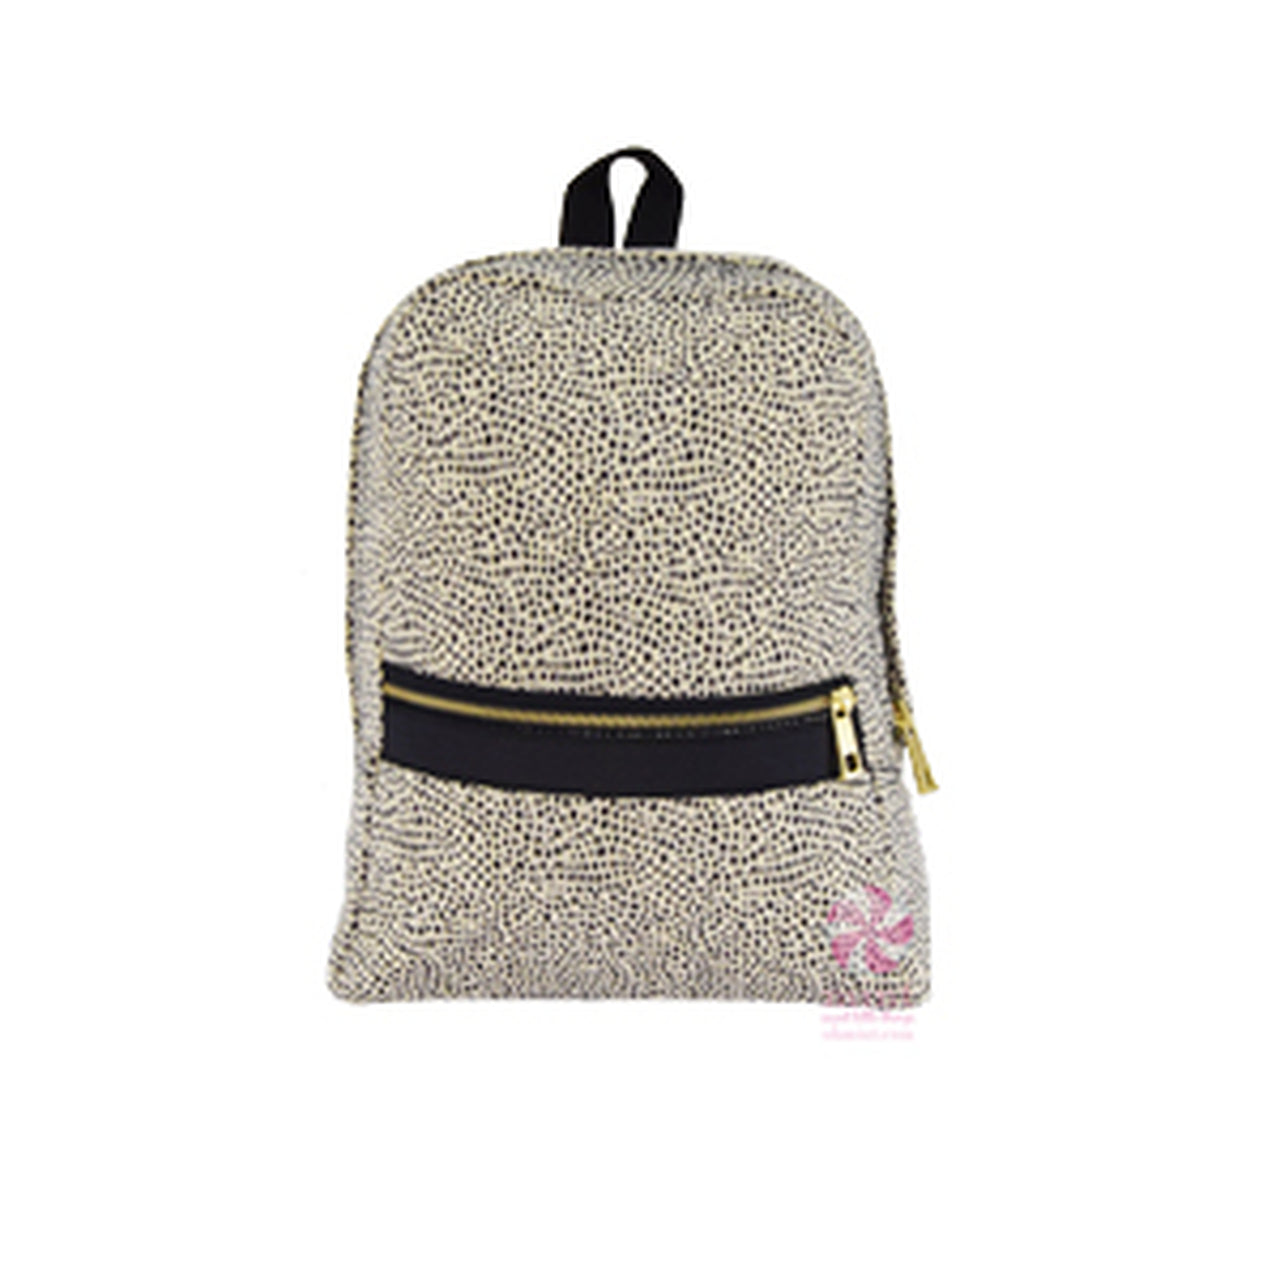 Medium Backpack- Cheetah